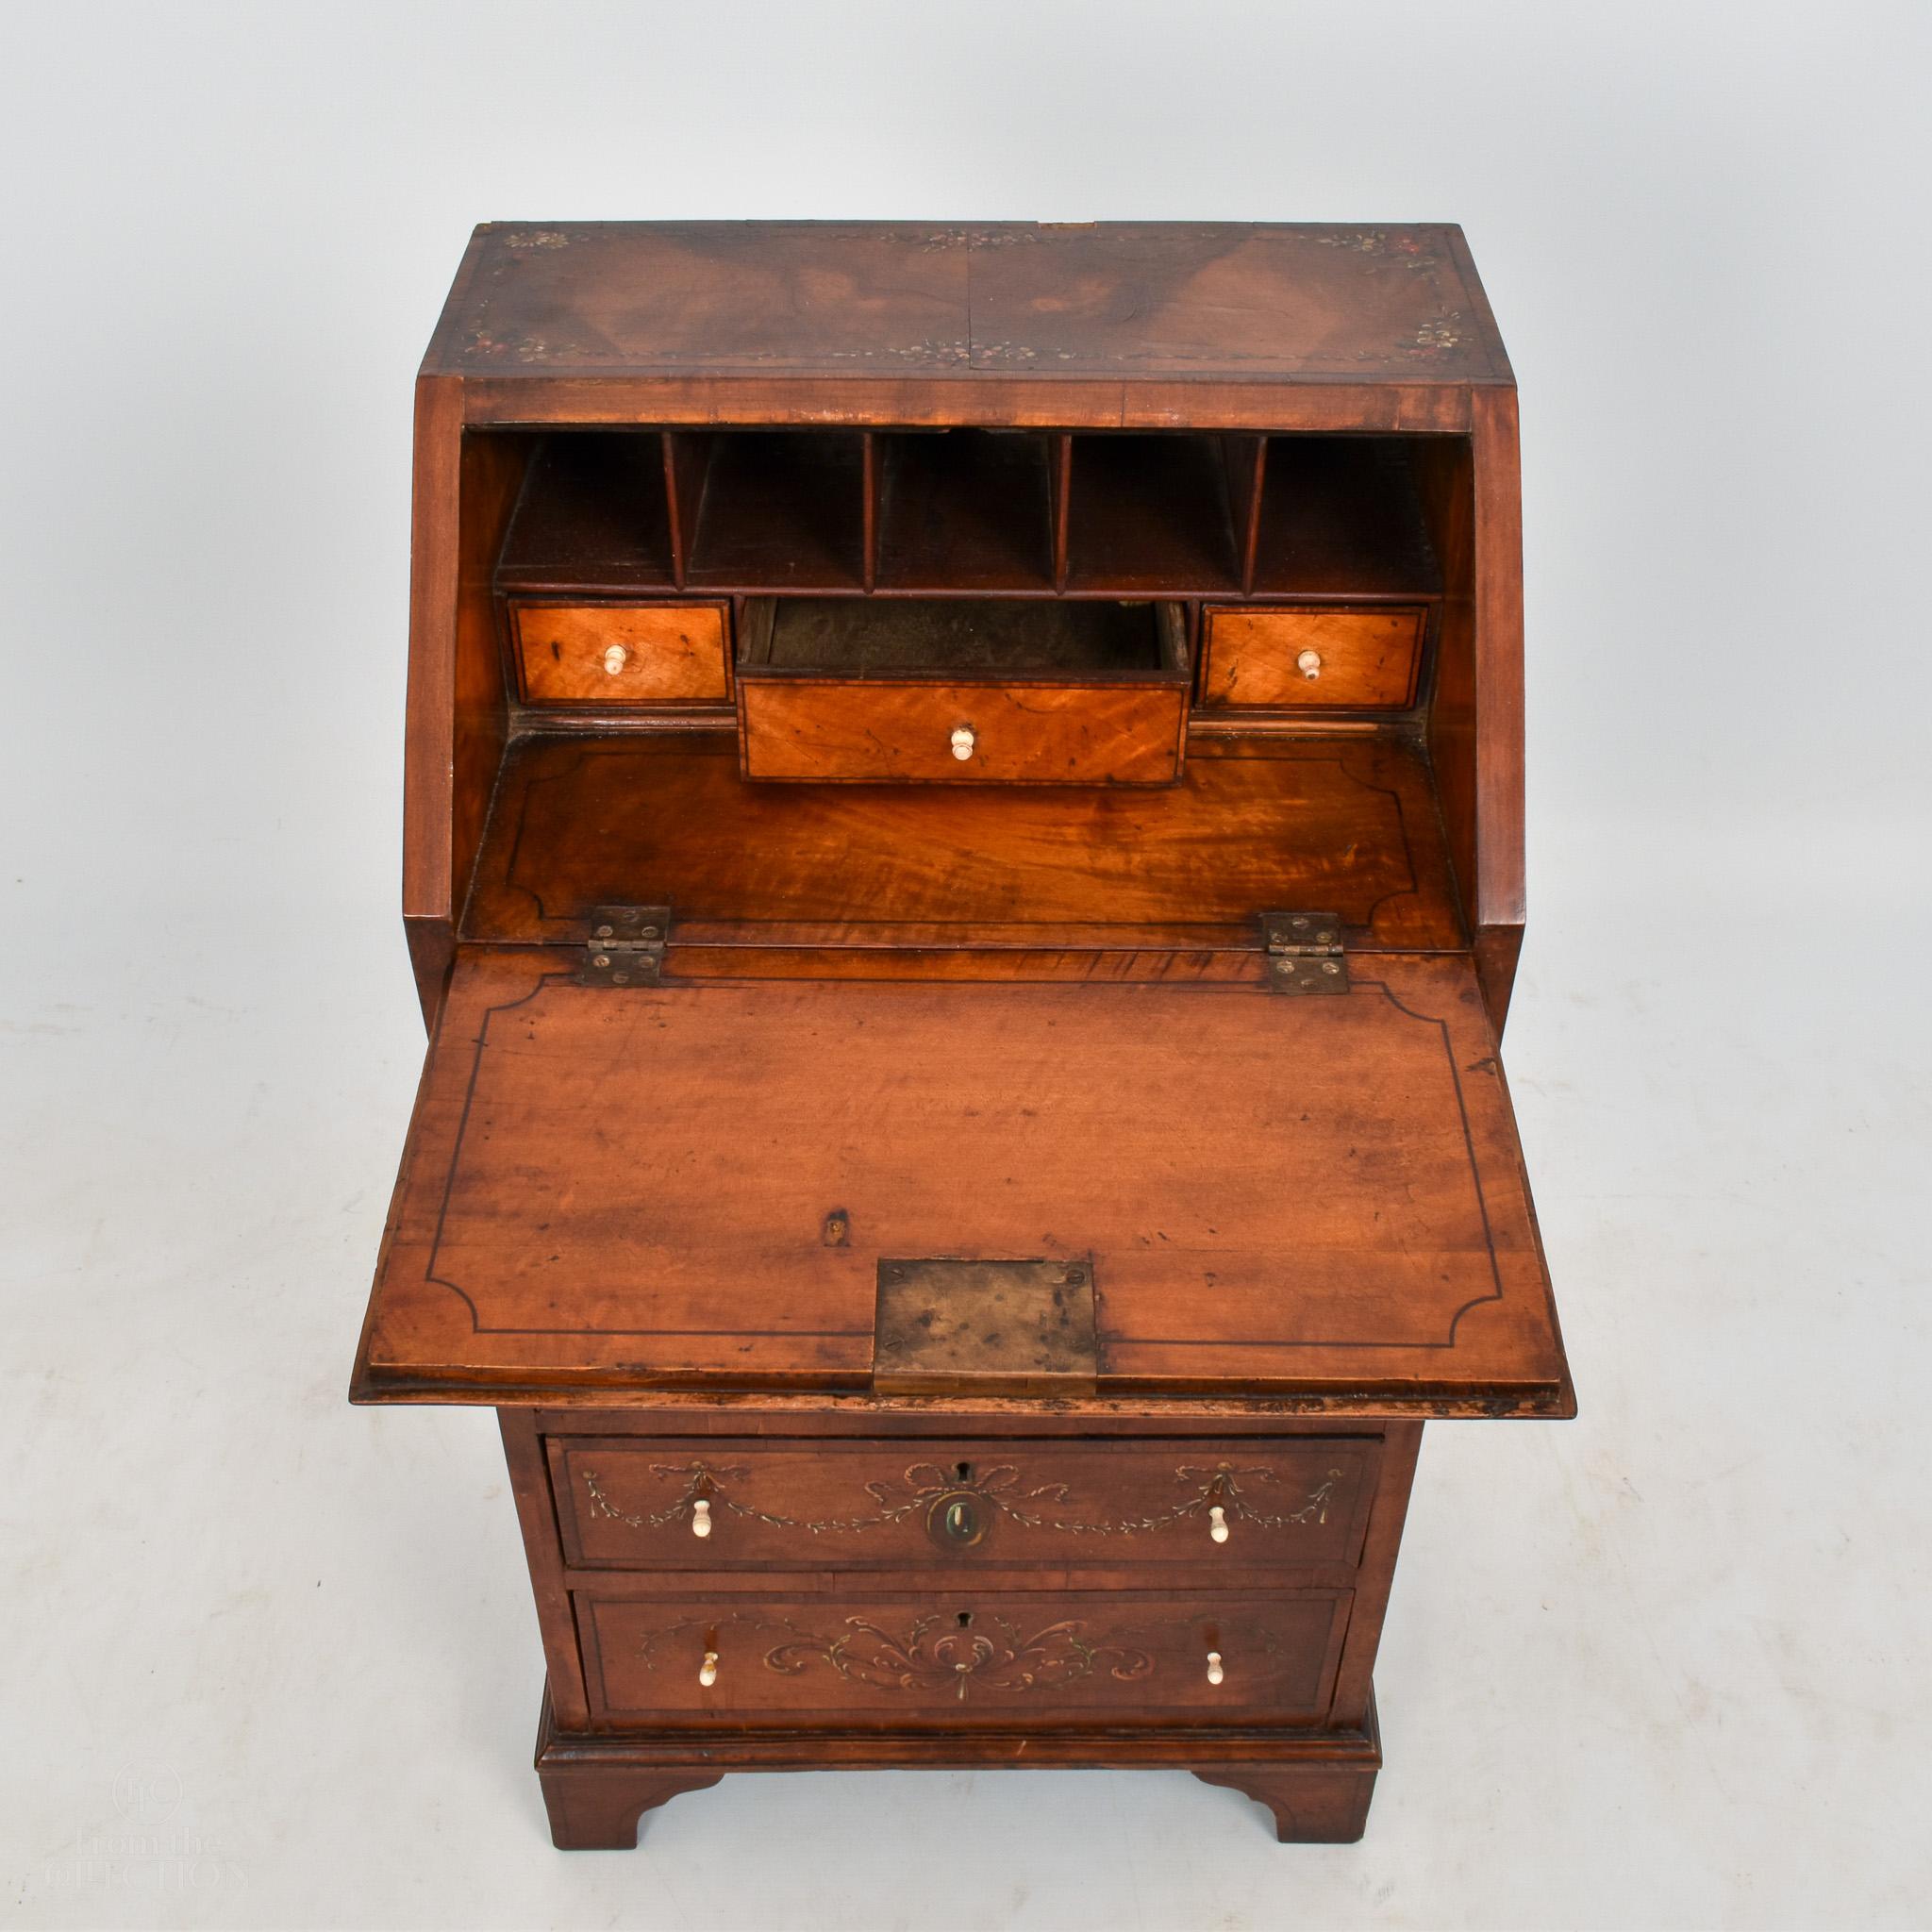 British Childs Exceptionally Rare Satinwood Bureau Desk circa 1770 For Sale